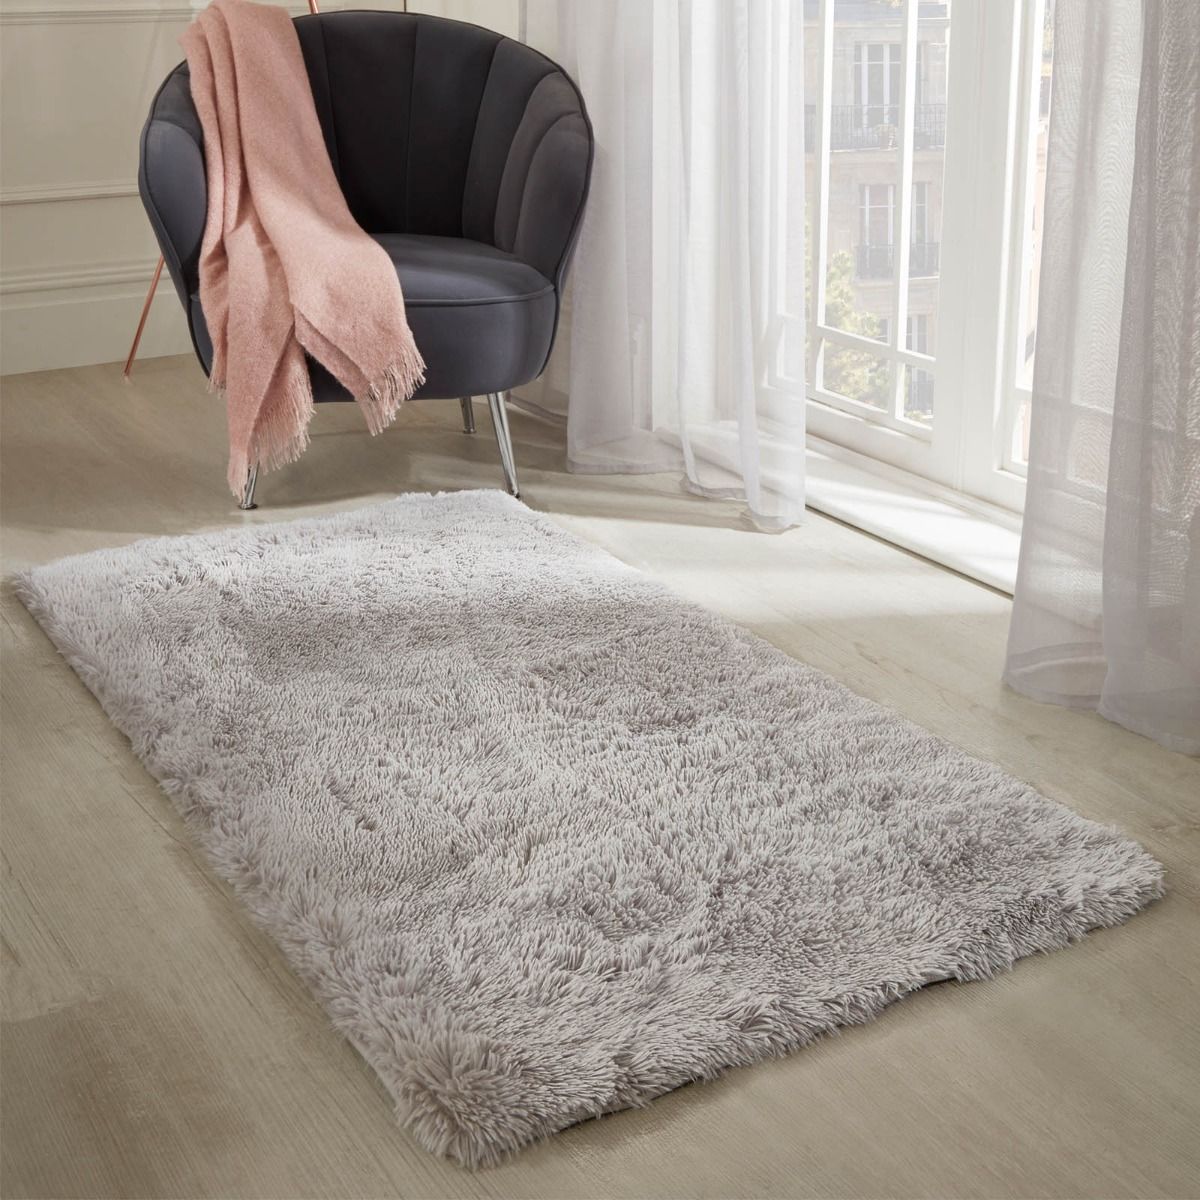 Sienna Soft Fluffy Rug Anti-Slip Plain Shaggy Floor Mat, Silver - 80 x 150cm